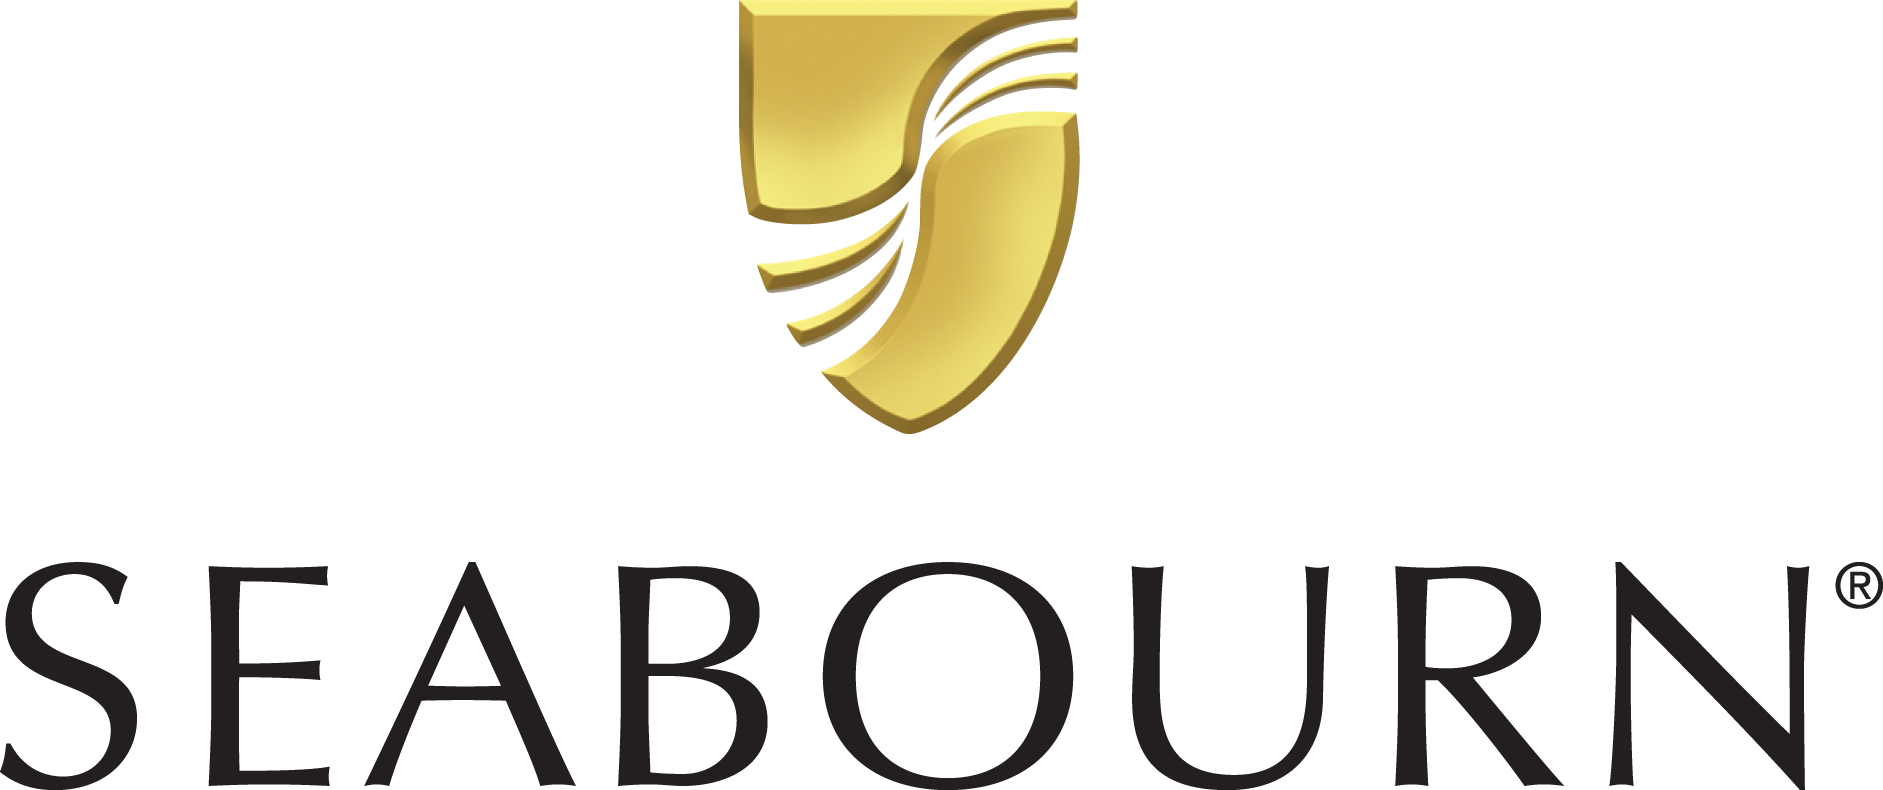 Seabourn Venture Reederei Logo